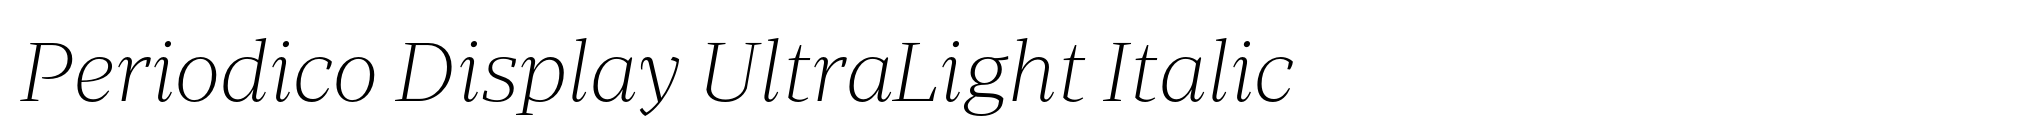 Periodico Display UltraLight Italic image